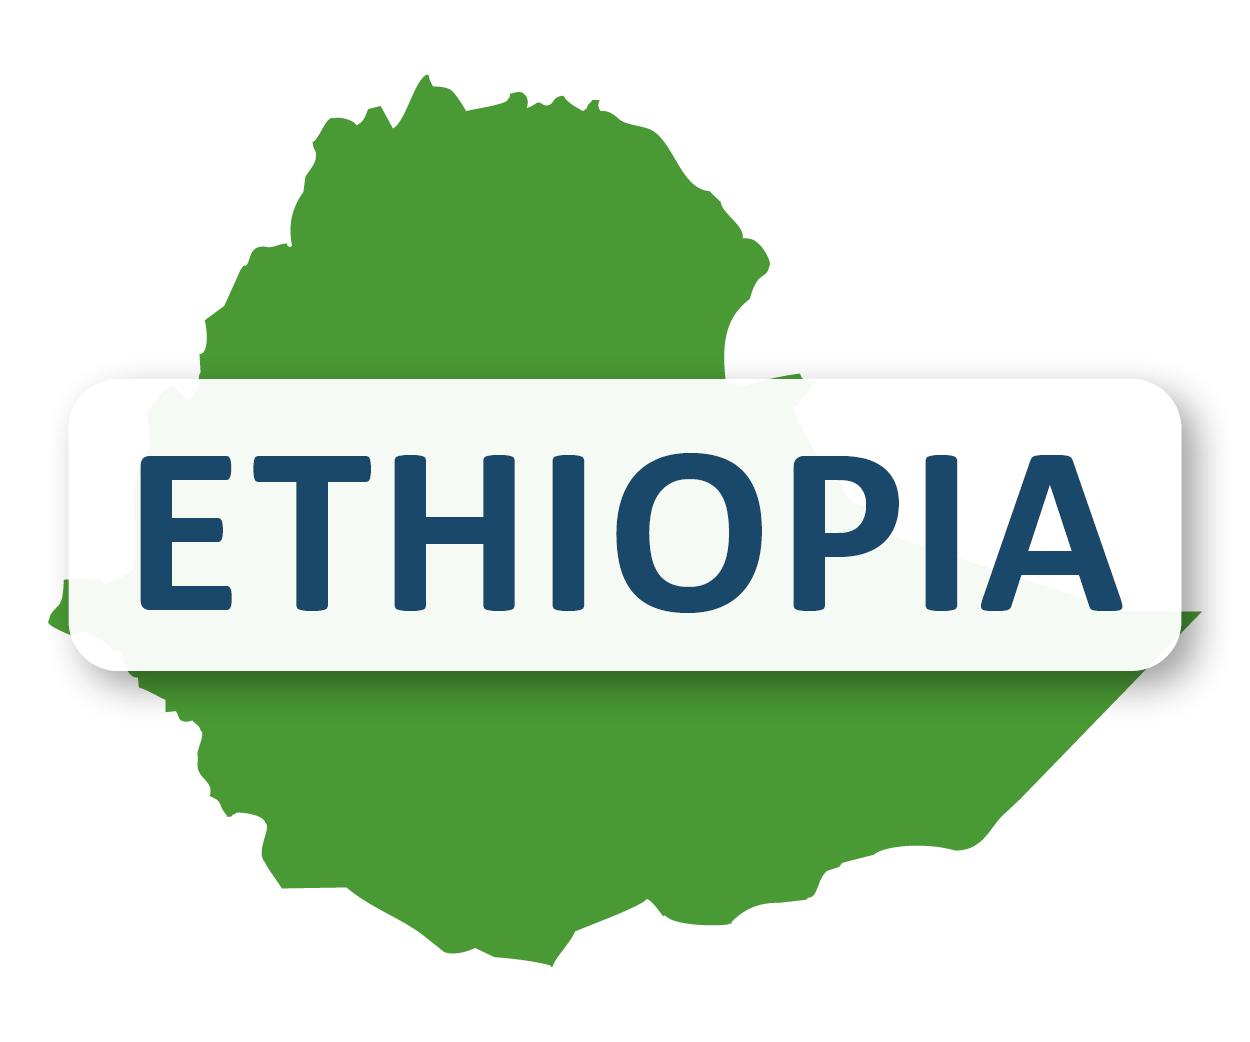 Ethiopia map outline with text 'Ethiopia'